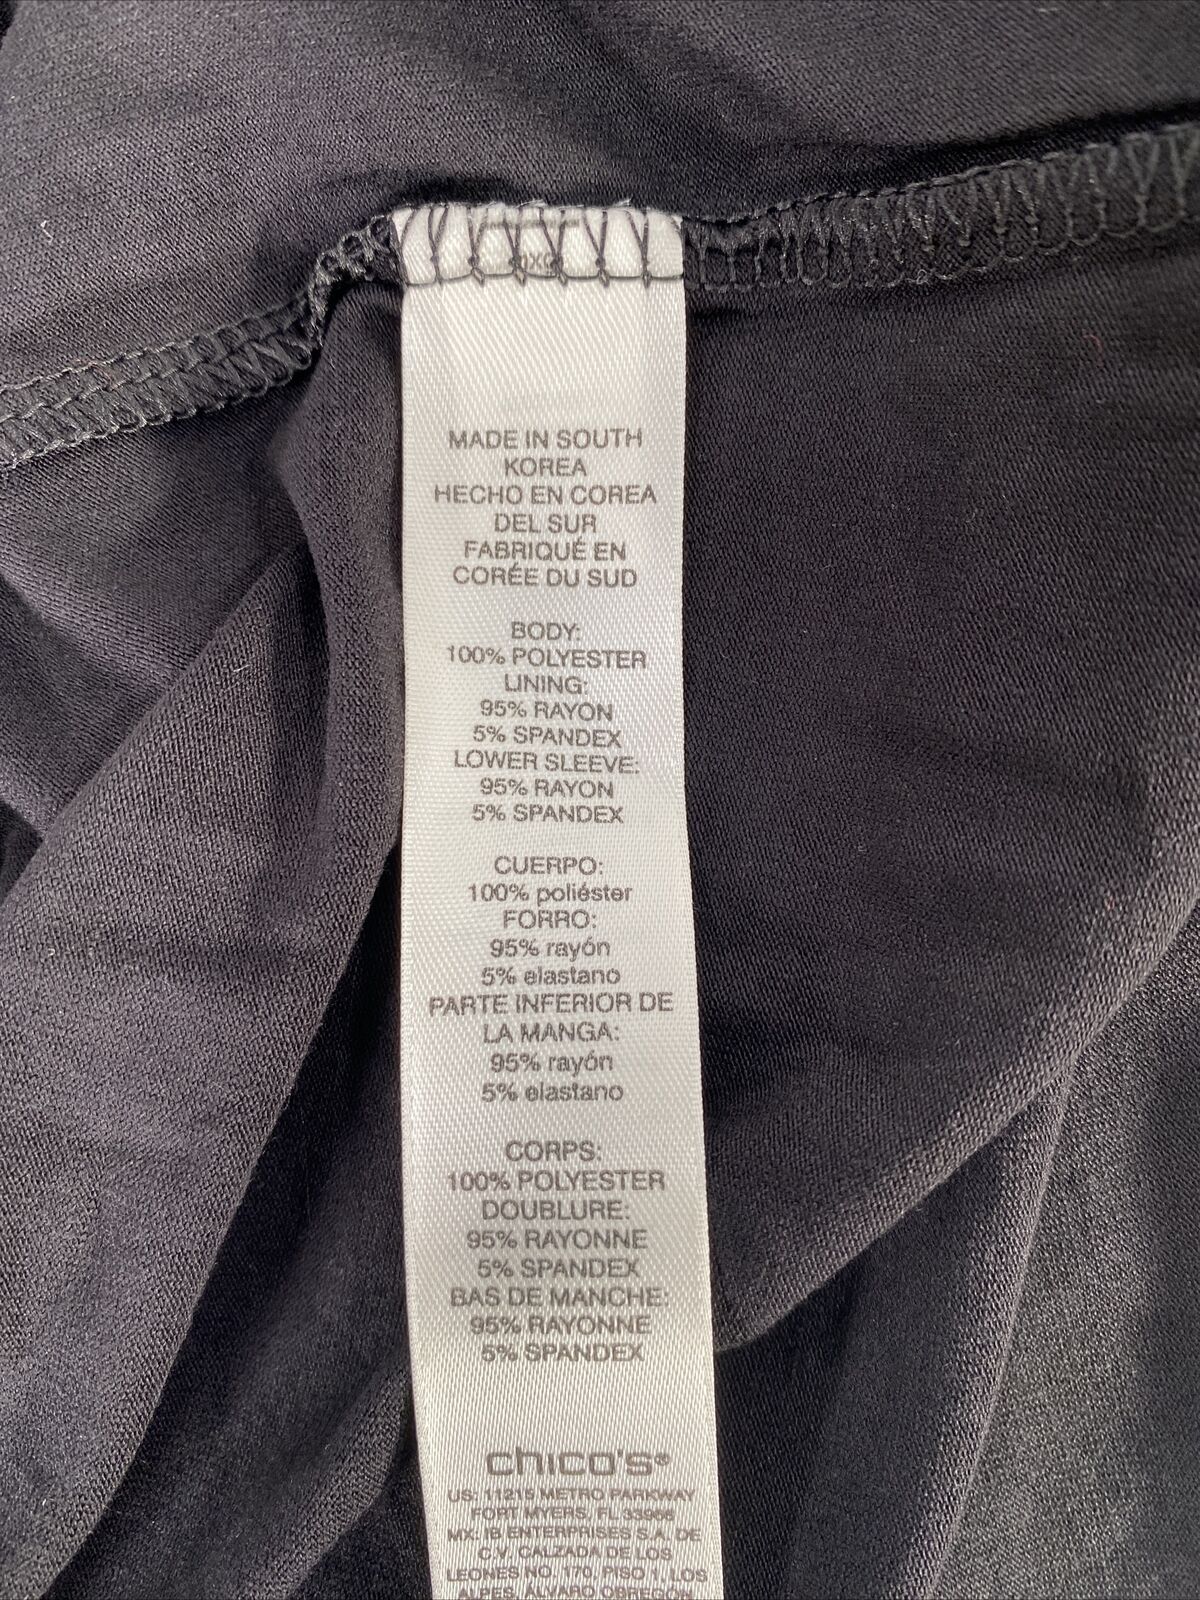 Chico's Blusa transparente con forro de manga 3/4 y rayas negras para mujer - 3/US XL